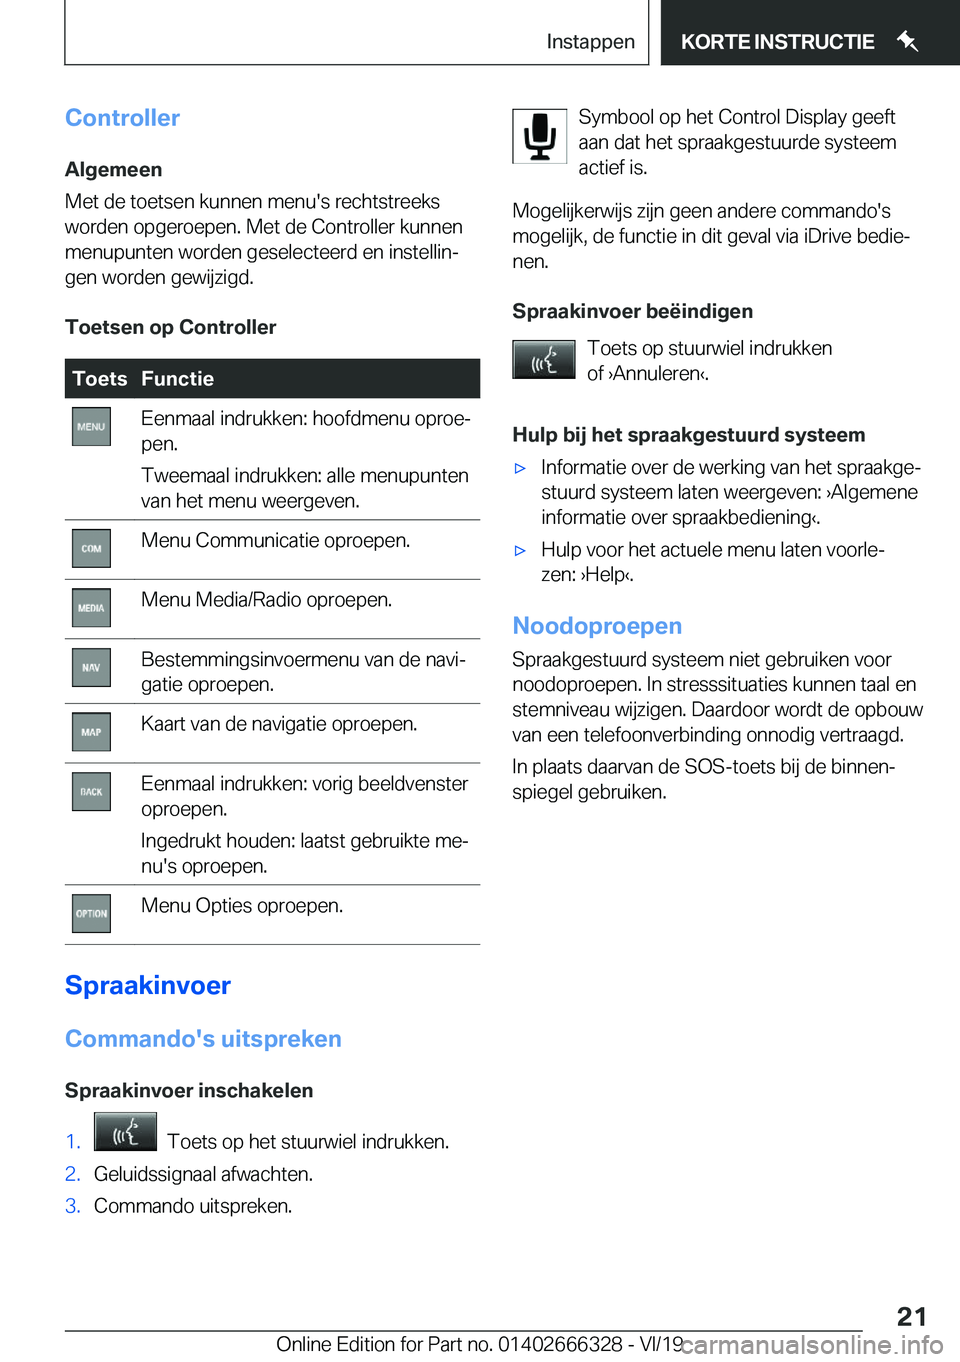 BMW 4 SERIES COUPE 2020  Instructieboekjes (in Dutch) �C�o�n�t�r�o�l�l�e�r�A�l�g�e�m�e�e�n
�M�e�t��d�e��t�o�e�t�s�e�n��k�u�n�n�e�n��m�e�n�u�'�s��r�e�c�h�t�s�t�r�e�e�k�s
�w�o�r�d�e�n��o�p�g�e�r�o�e�p�e�n�.��M�e�t��d�e��C�o�n�t�r�o�l�l�e�r��k